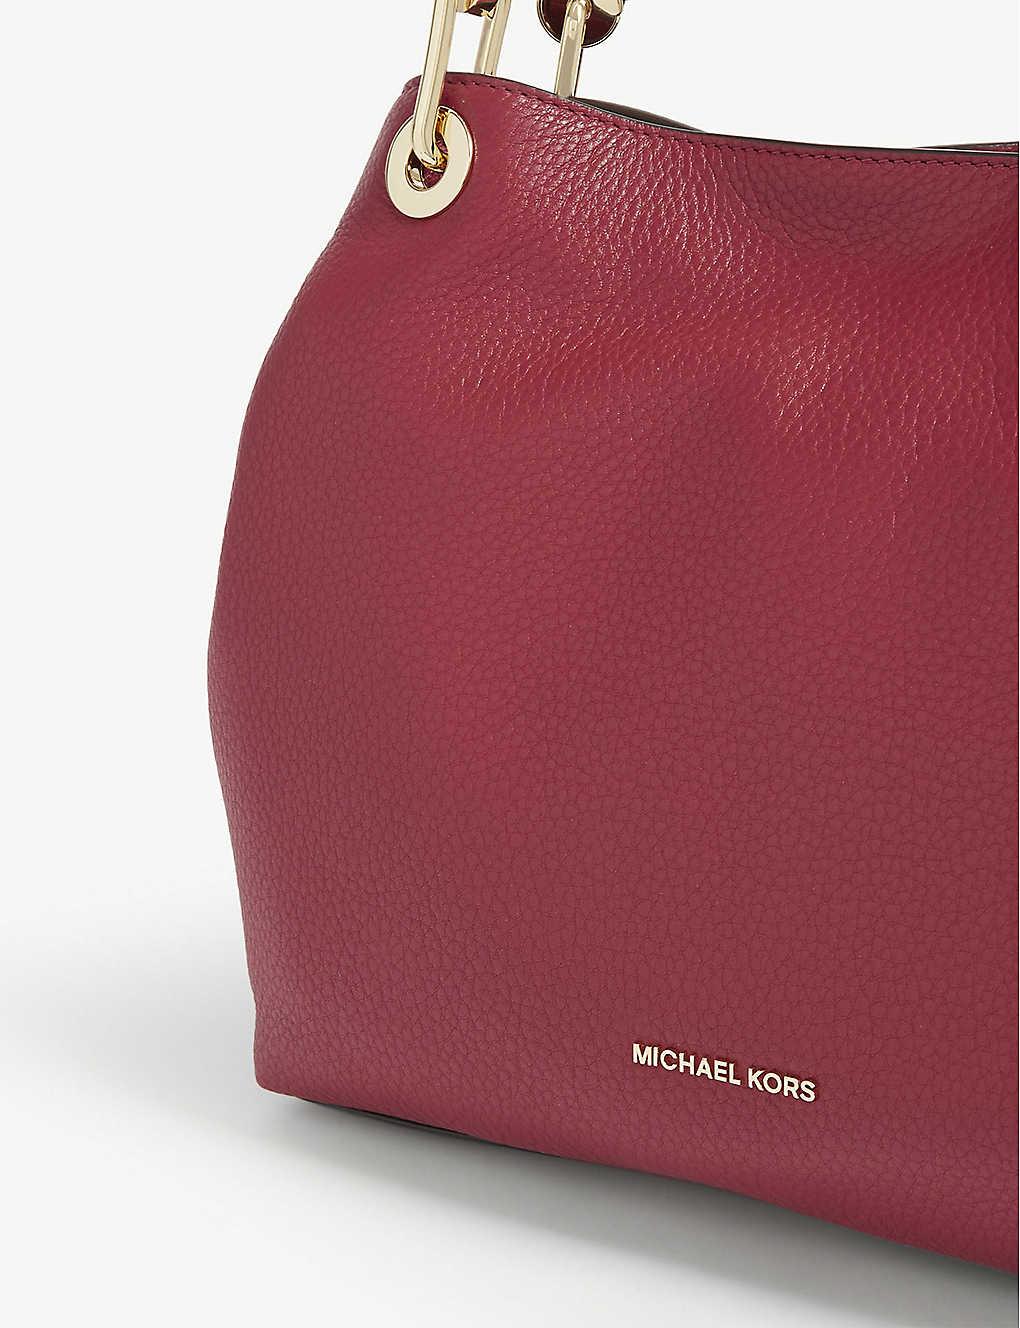 Michael Michael Kors women's shoulder bag PURPLISH RED